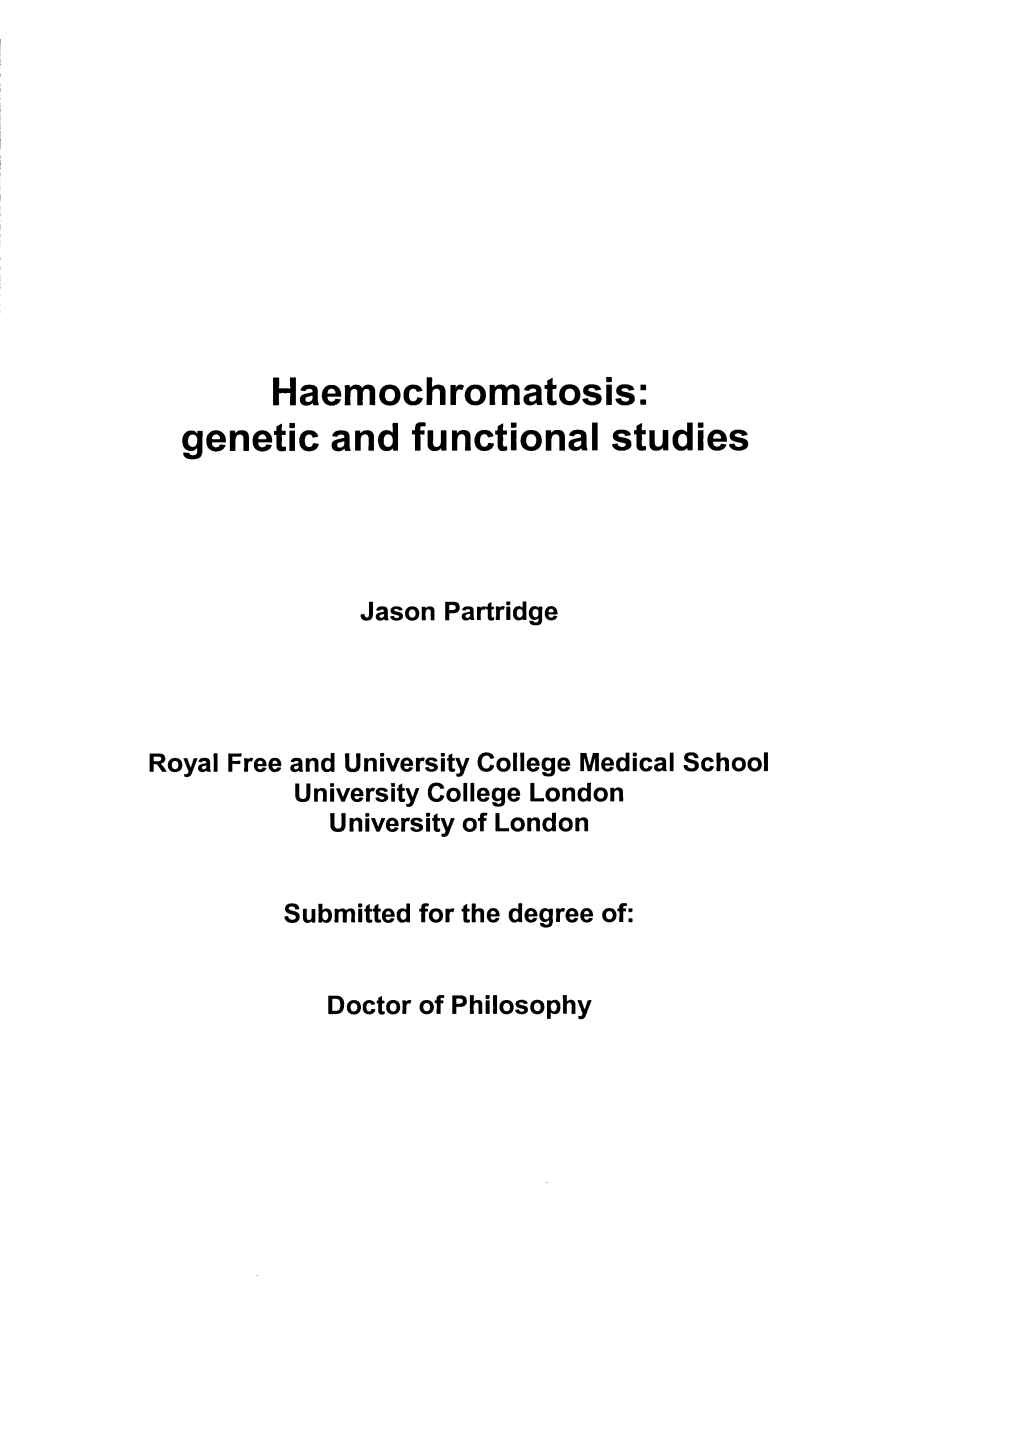 Haemochromatosis: Genetic and Functional Studies